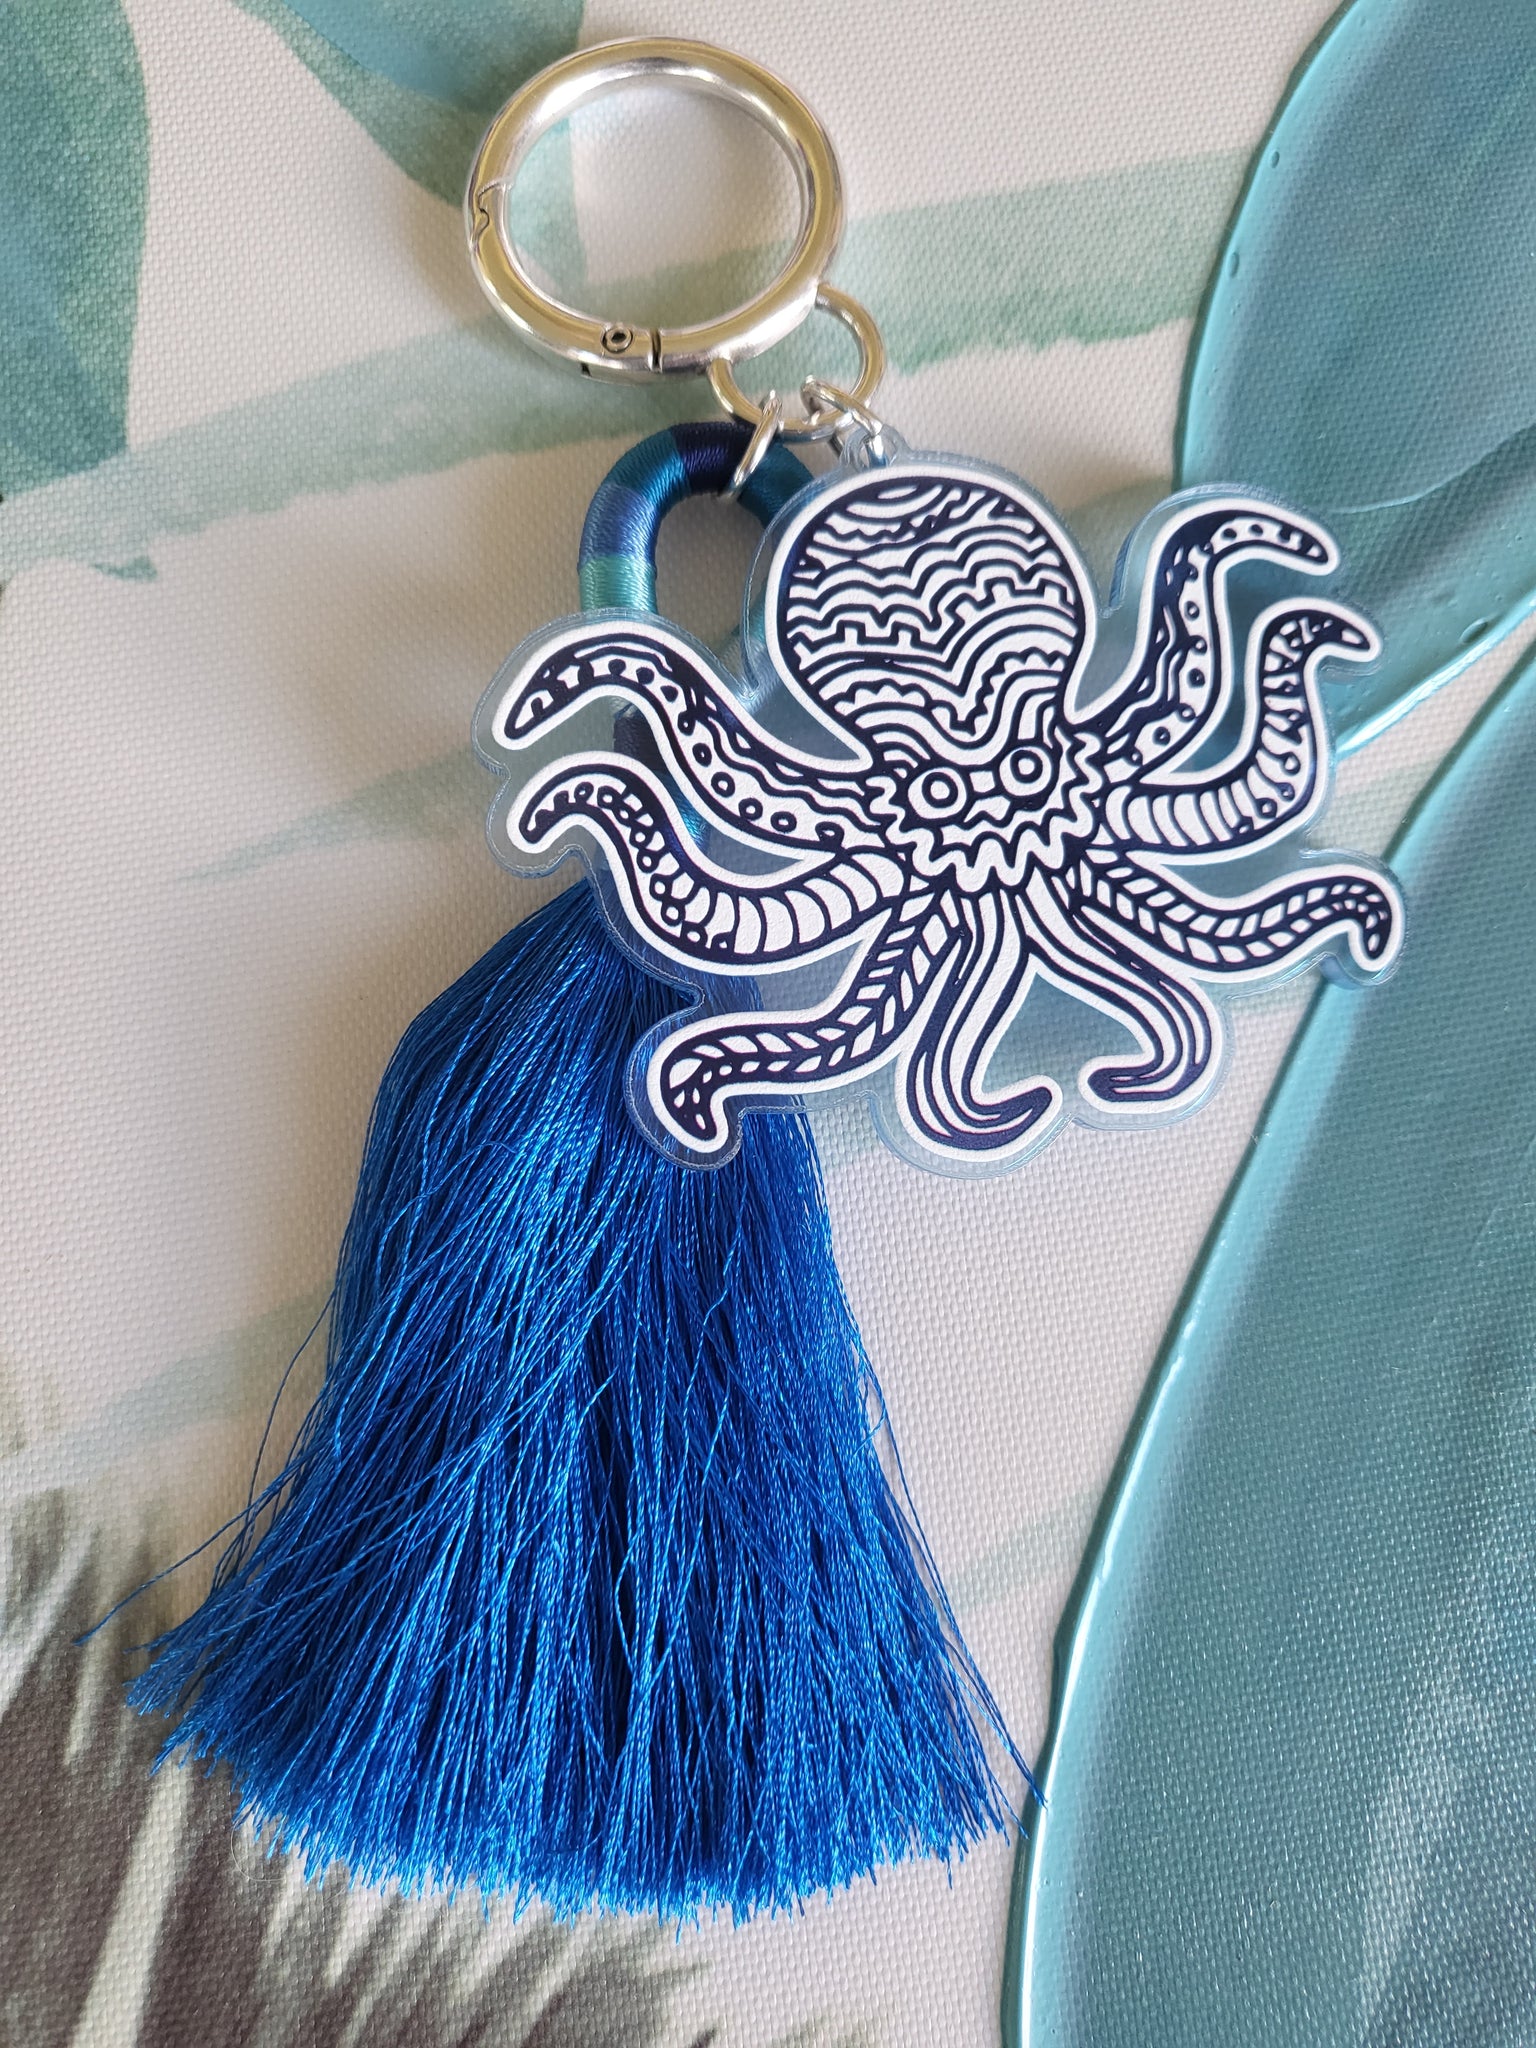 Bag charm with handmade sea creature